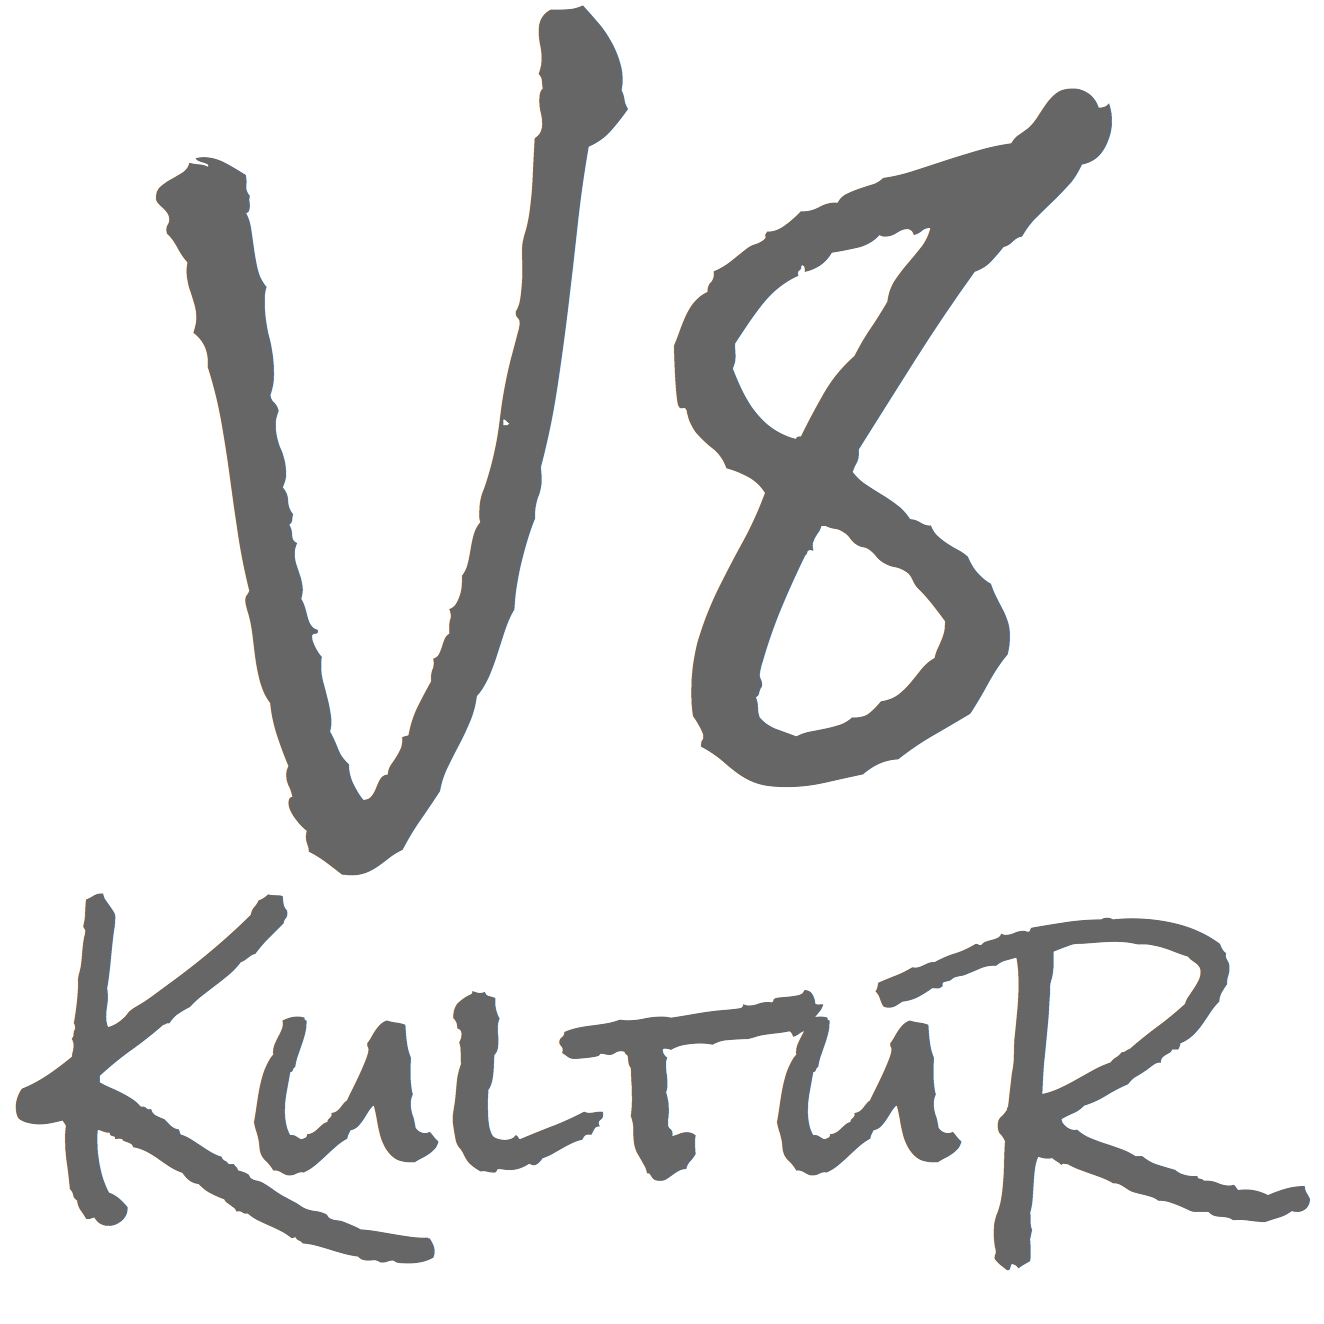 (c) V8-kultur.com